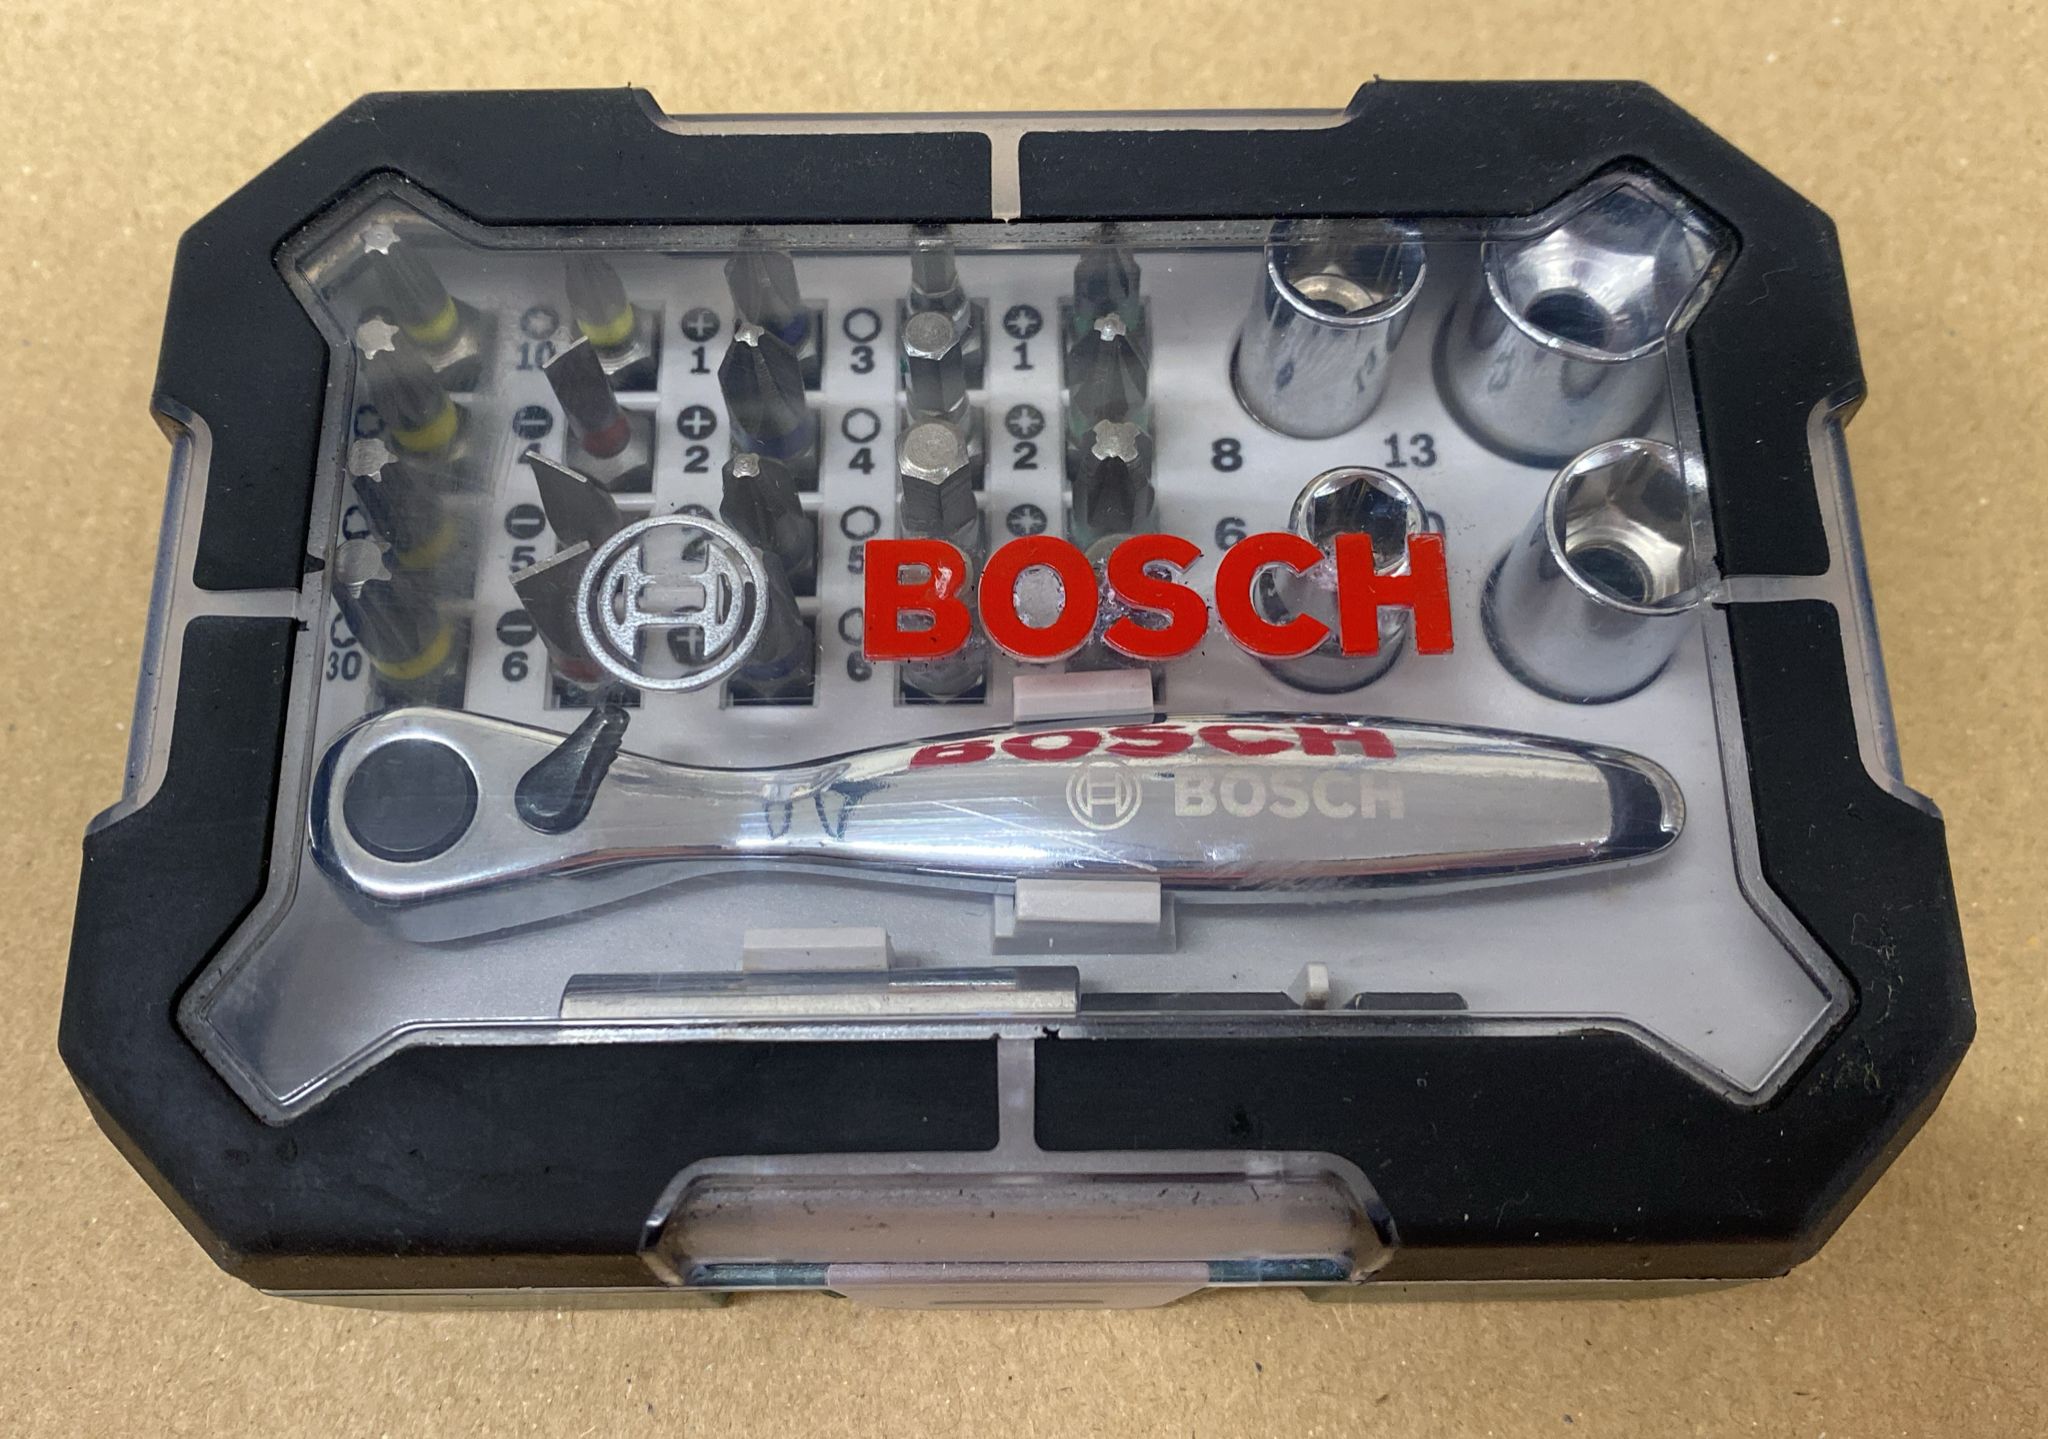 Bosch 26pc. Screwdriver Bit and Ratchet Set-8207